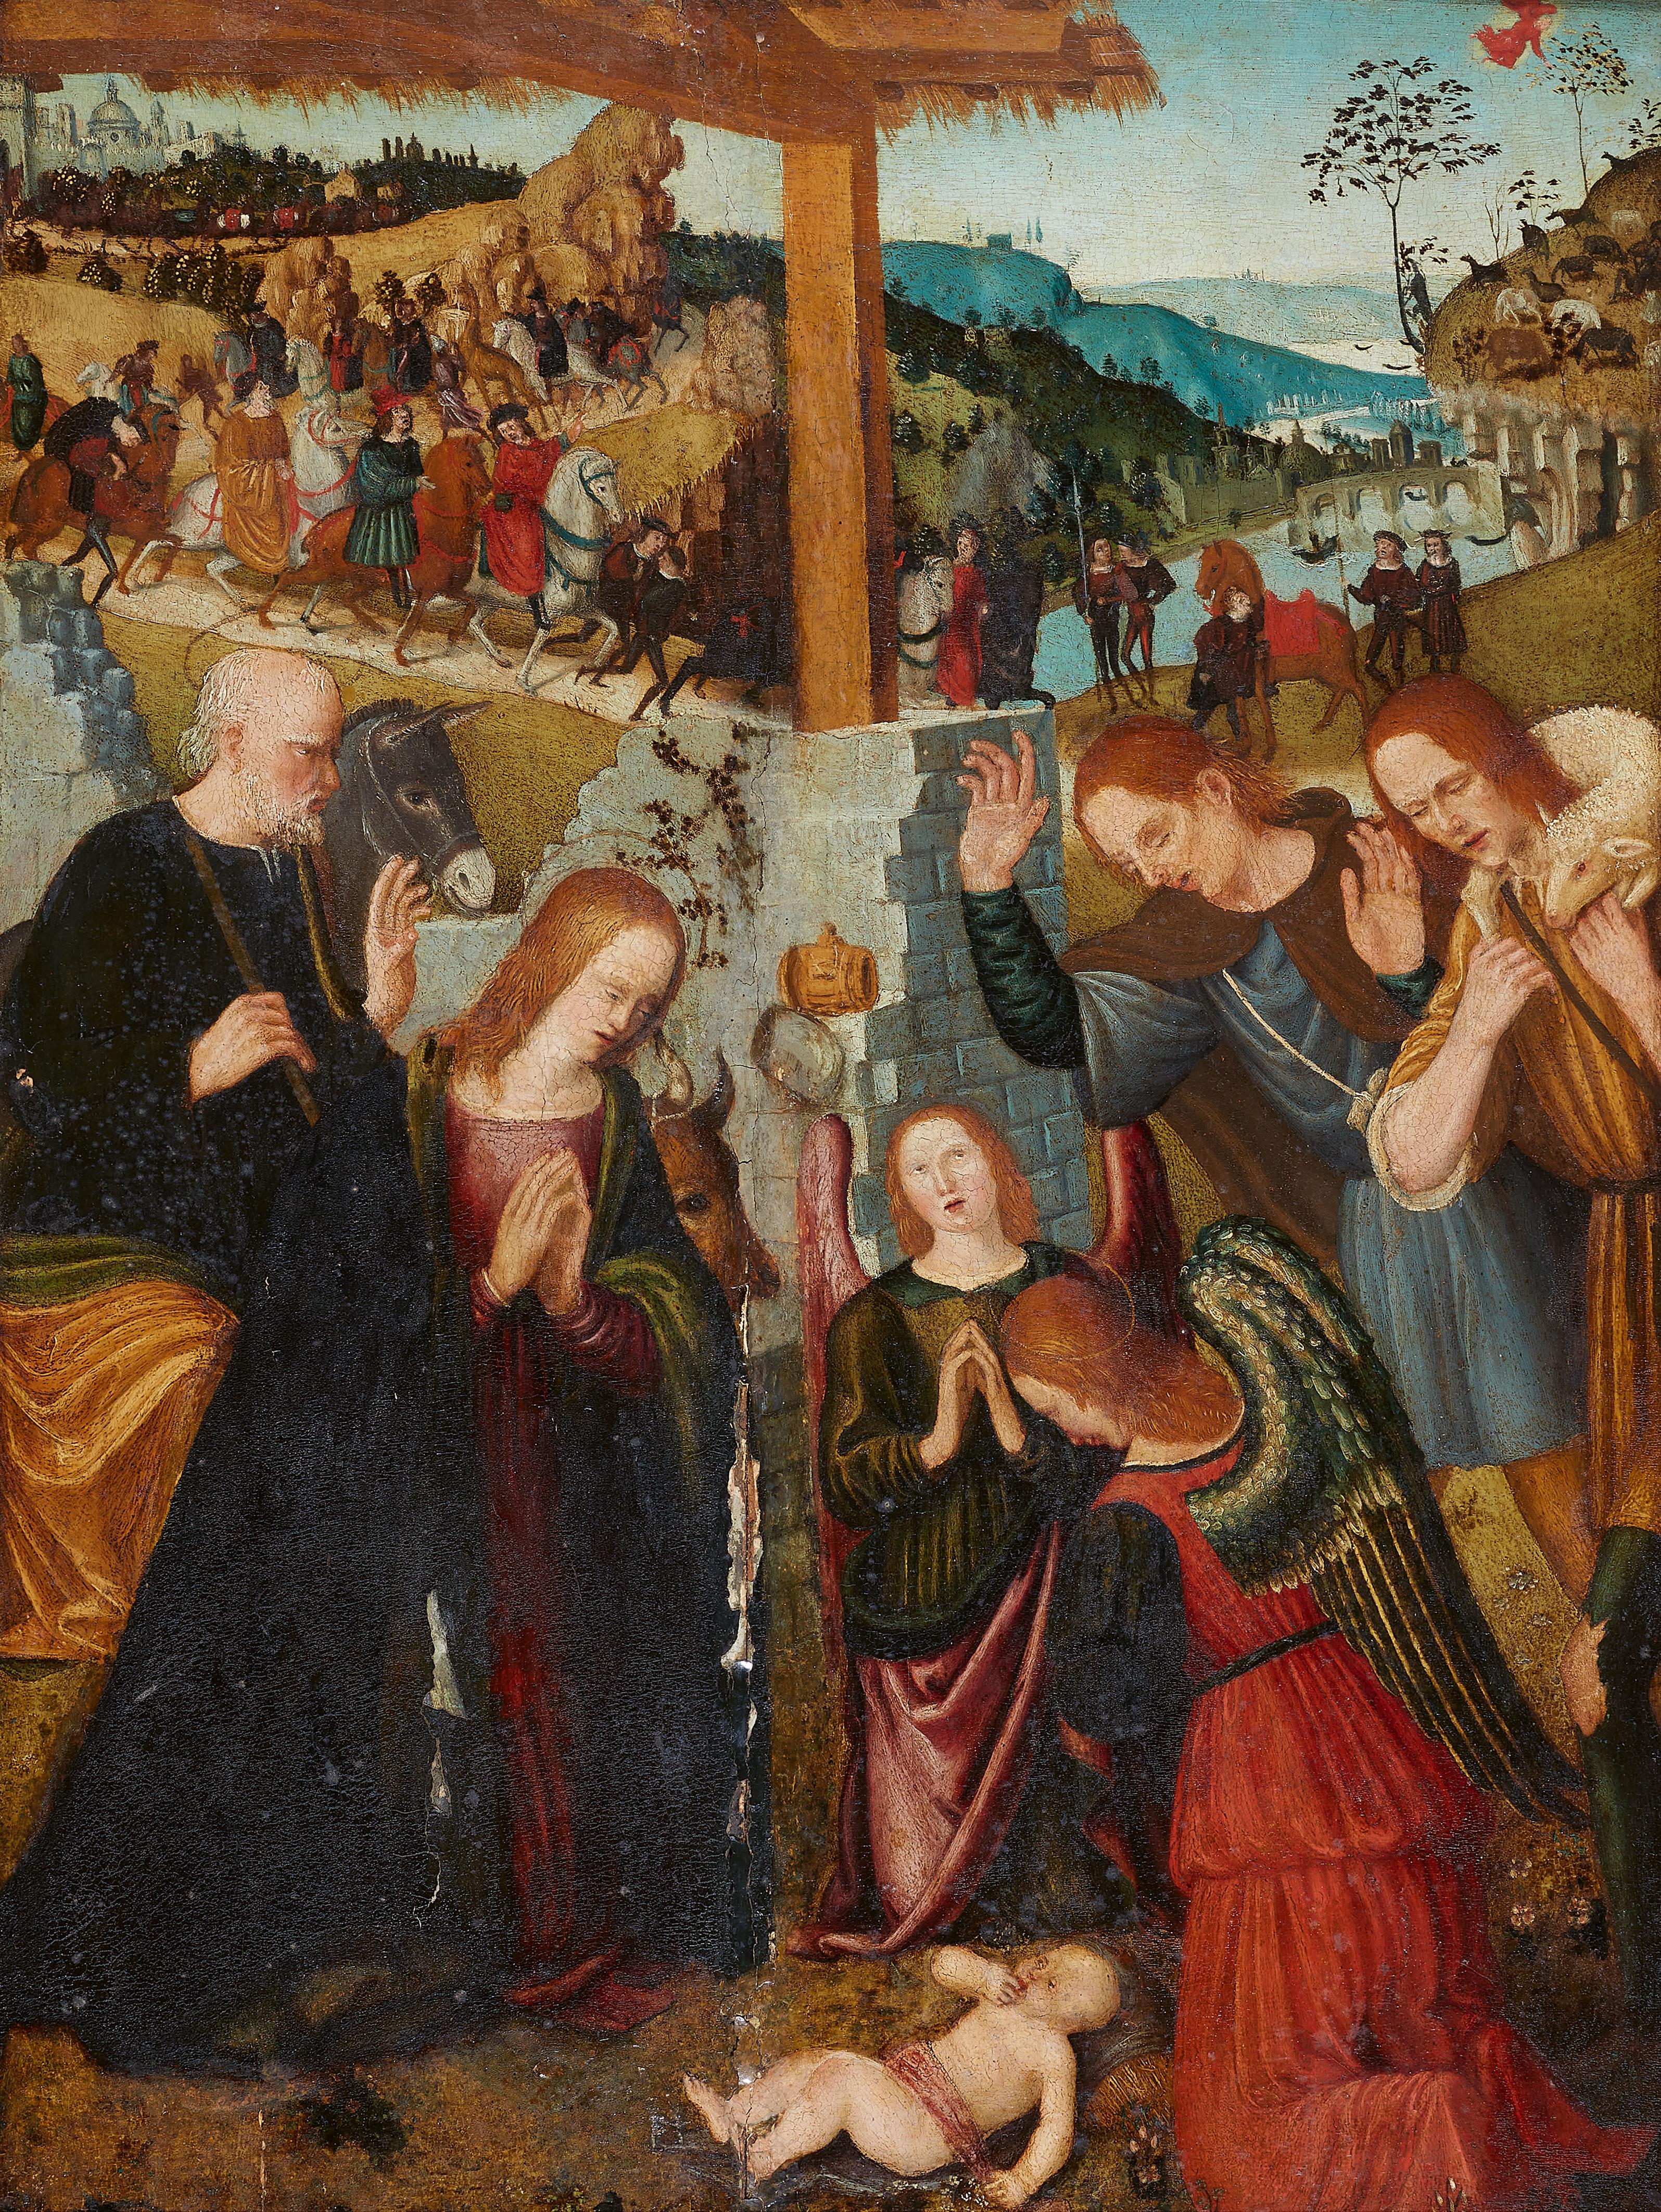 Wohl Bologneser Meister um 1500 - Geburt Christi - image-1